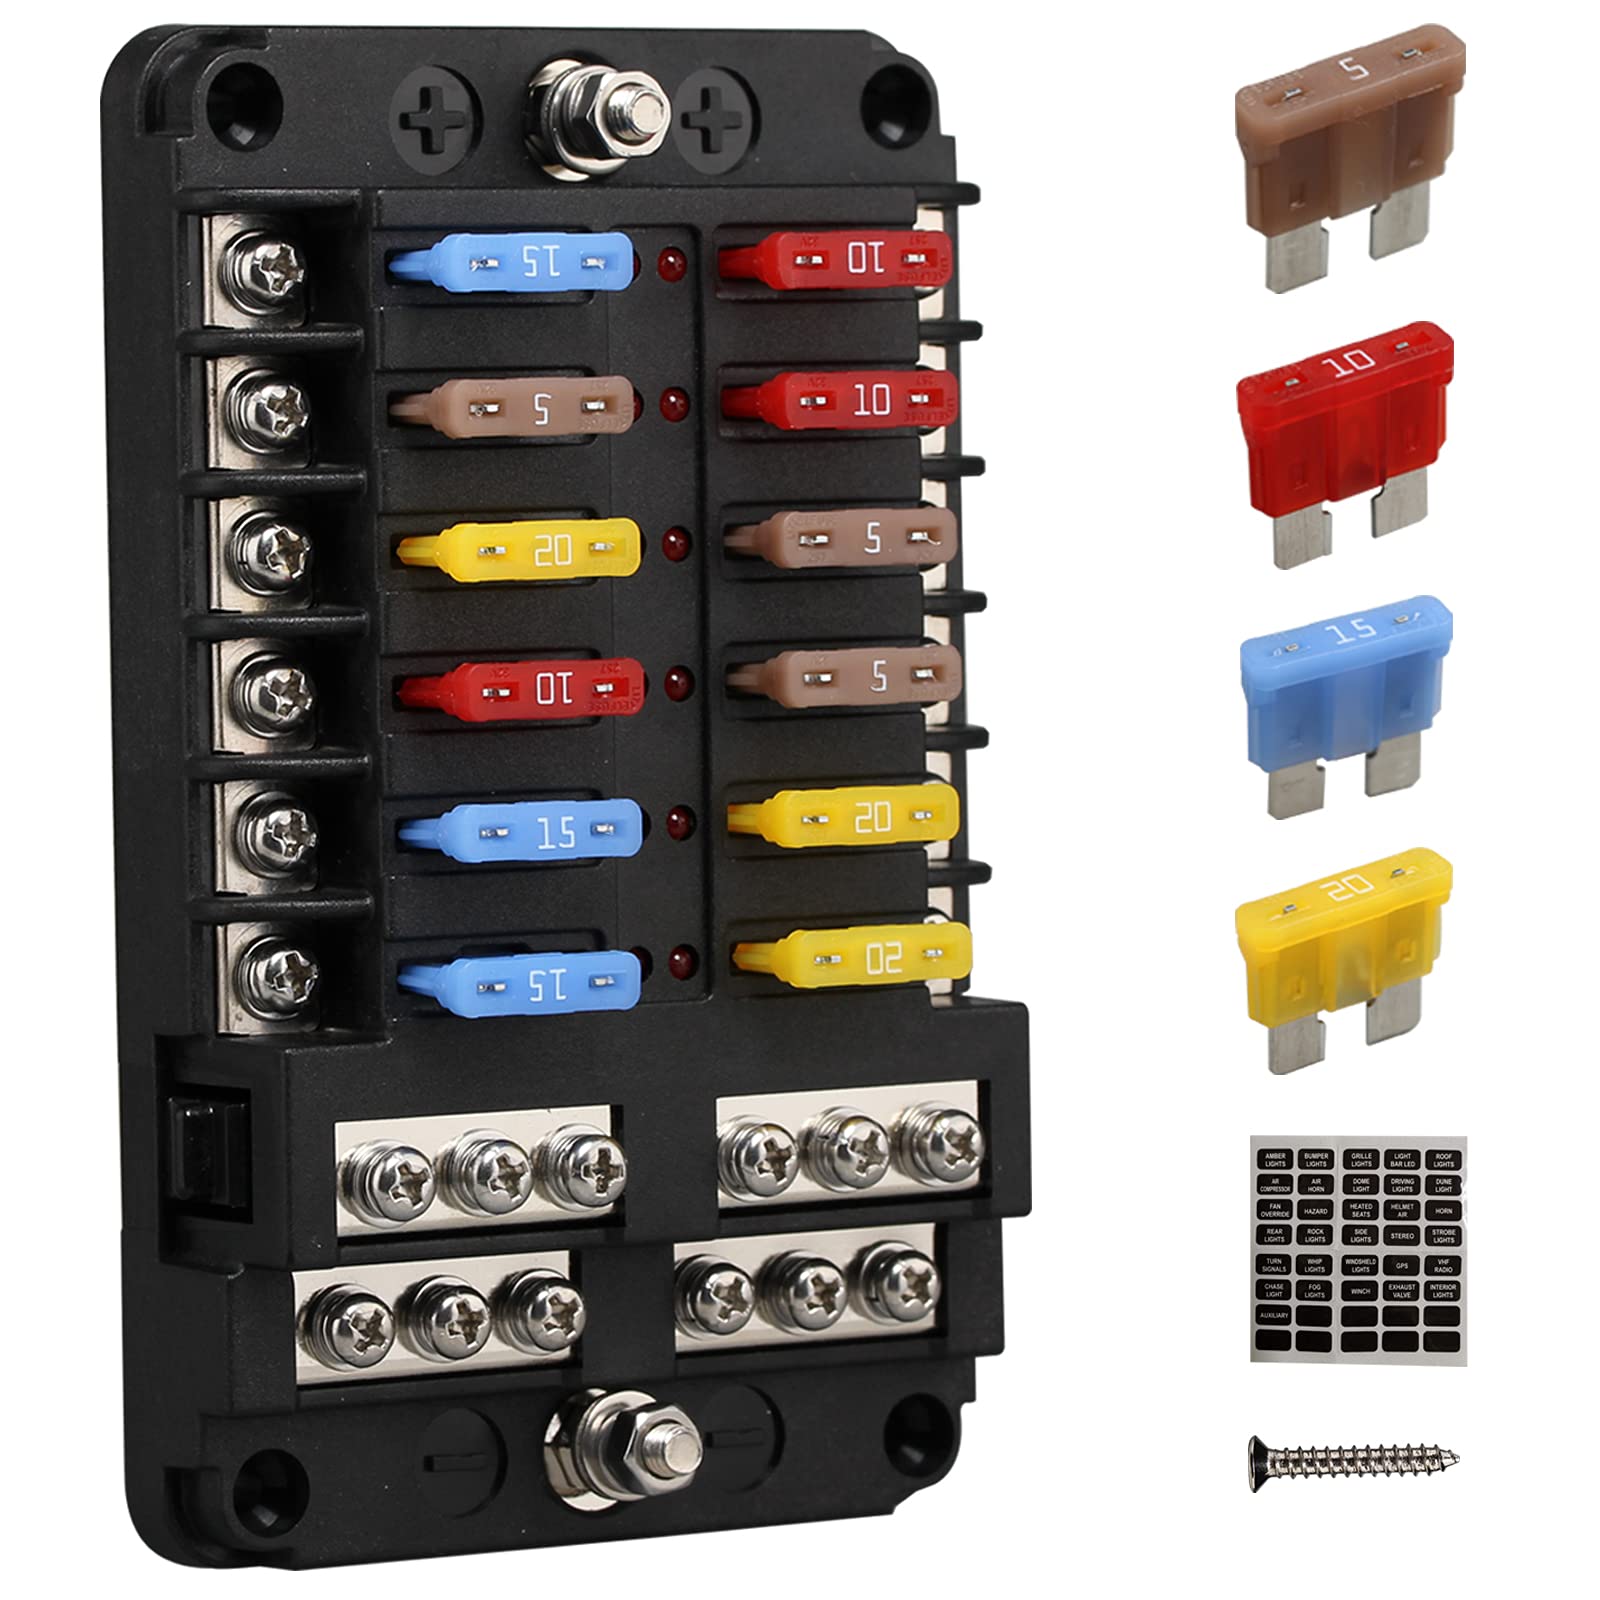 Blade ATC/ATO fuse blocks, ENDARK car fuse holder, 12 way fuse box with Negative Bus LED indicator for Car, Boat, Van, SUV